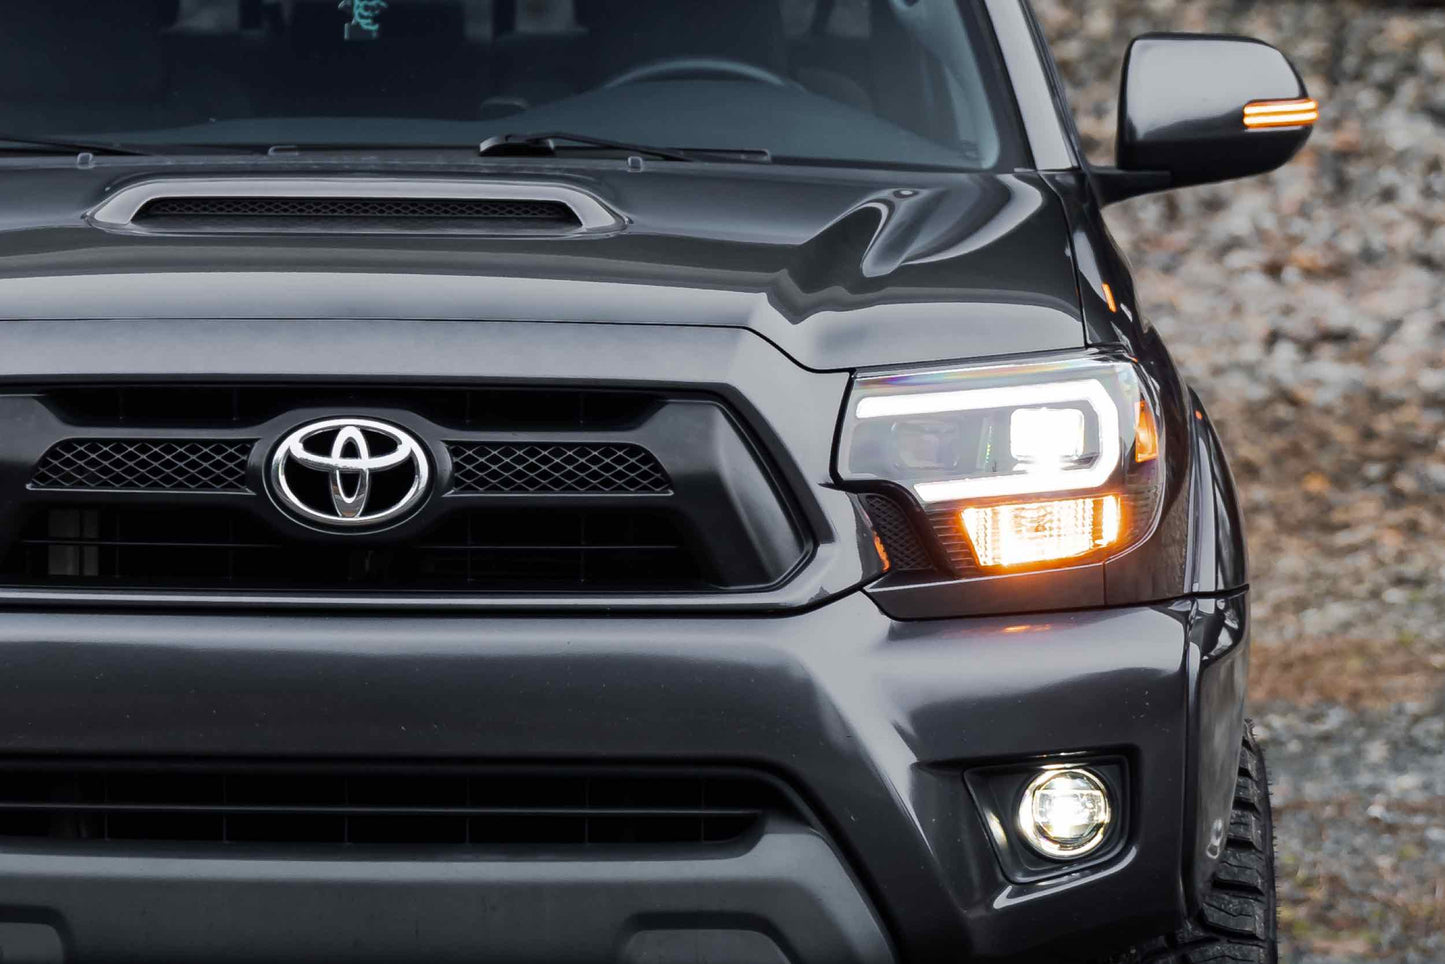 XB Hybrid LED Headlights: Toyota Tacoma (12-15) (Pair / Smoked)